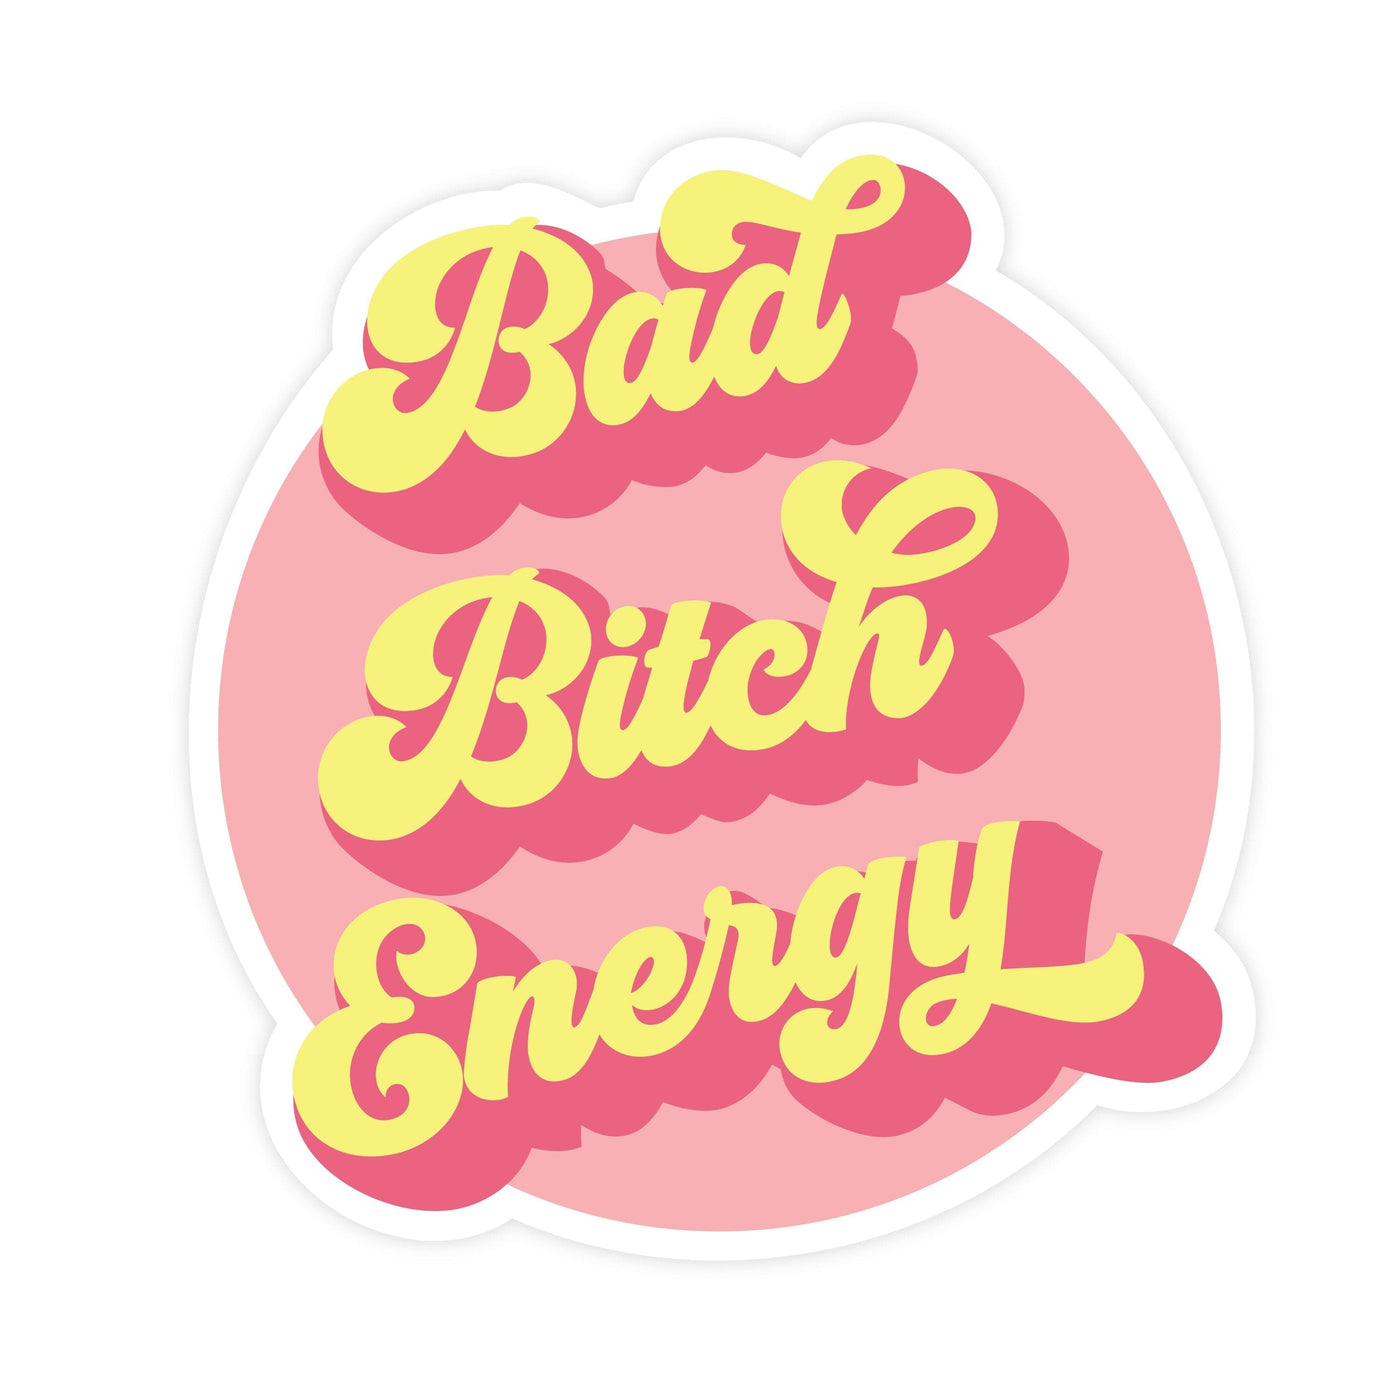 Bad Bitch Energy | Sticker